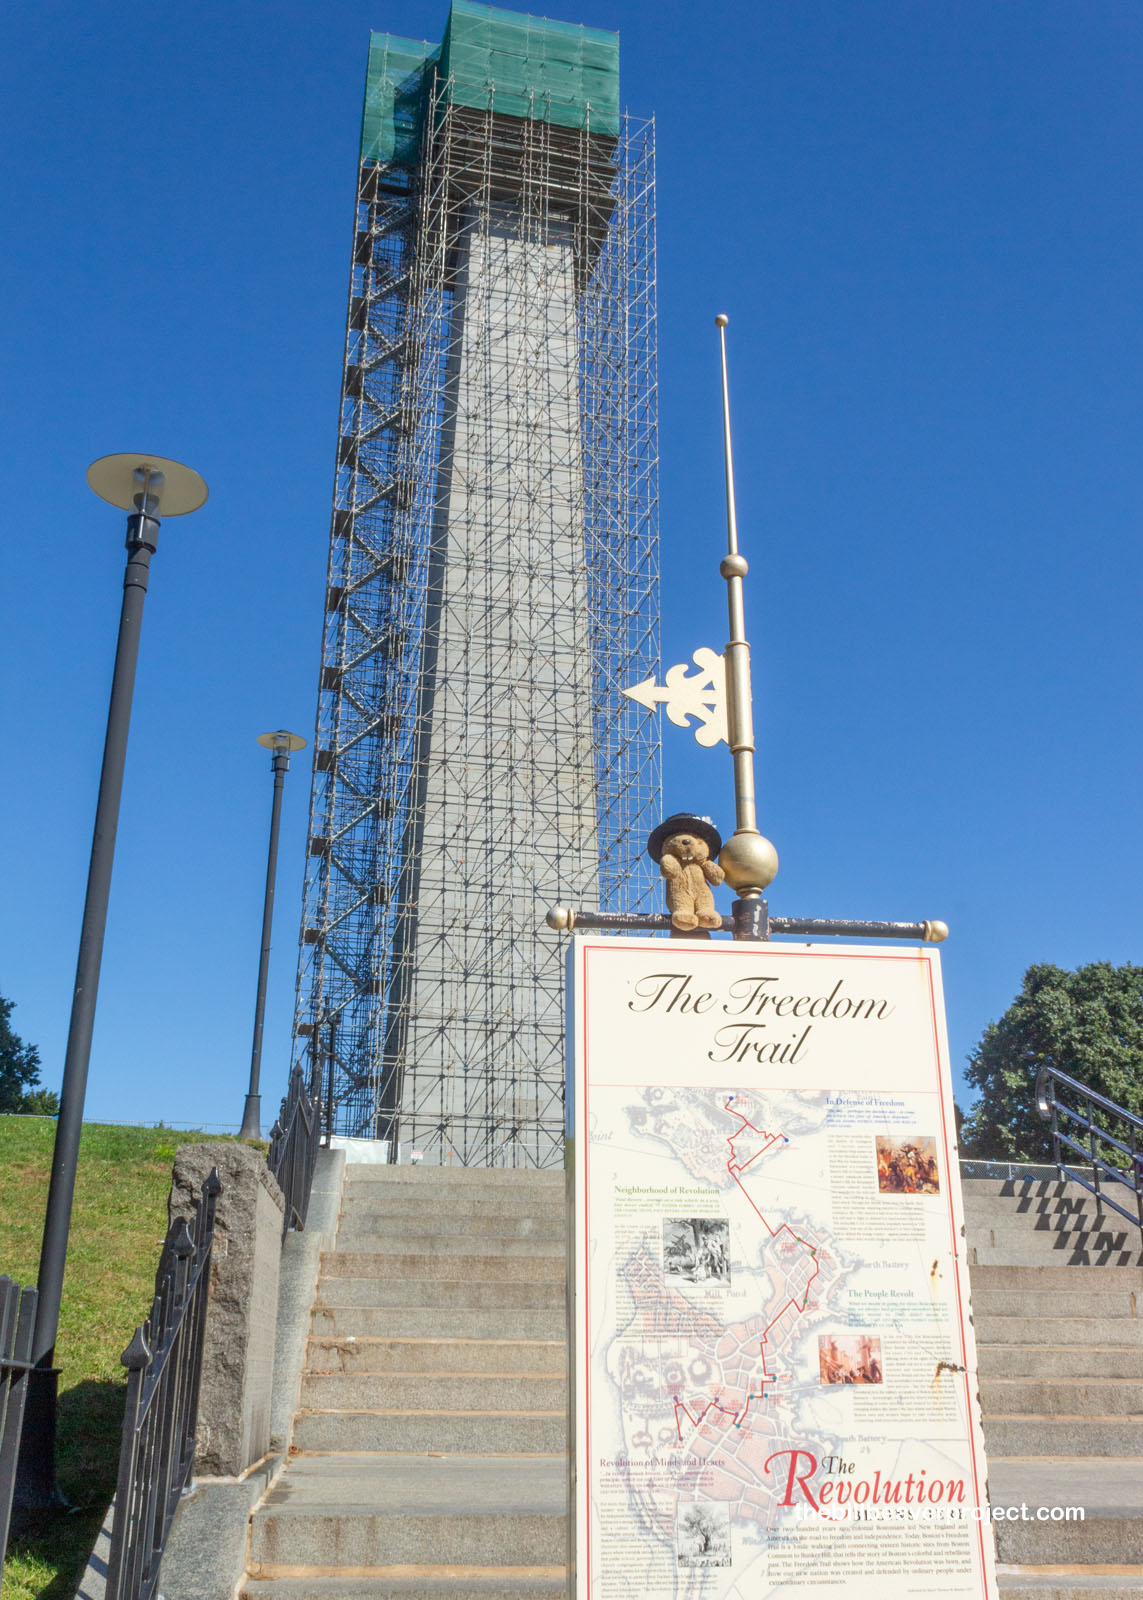 The monument under restoration!